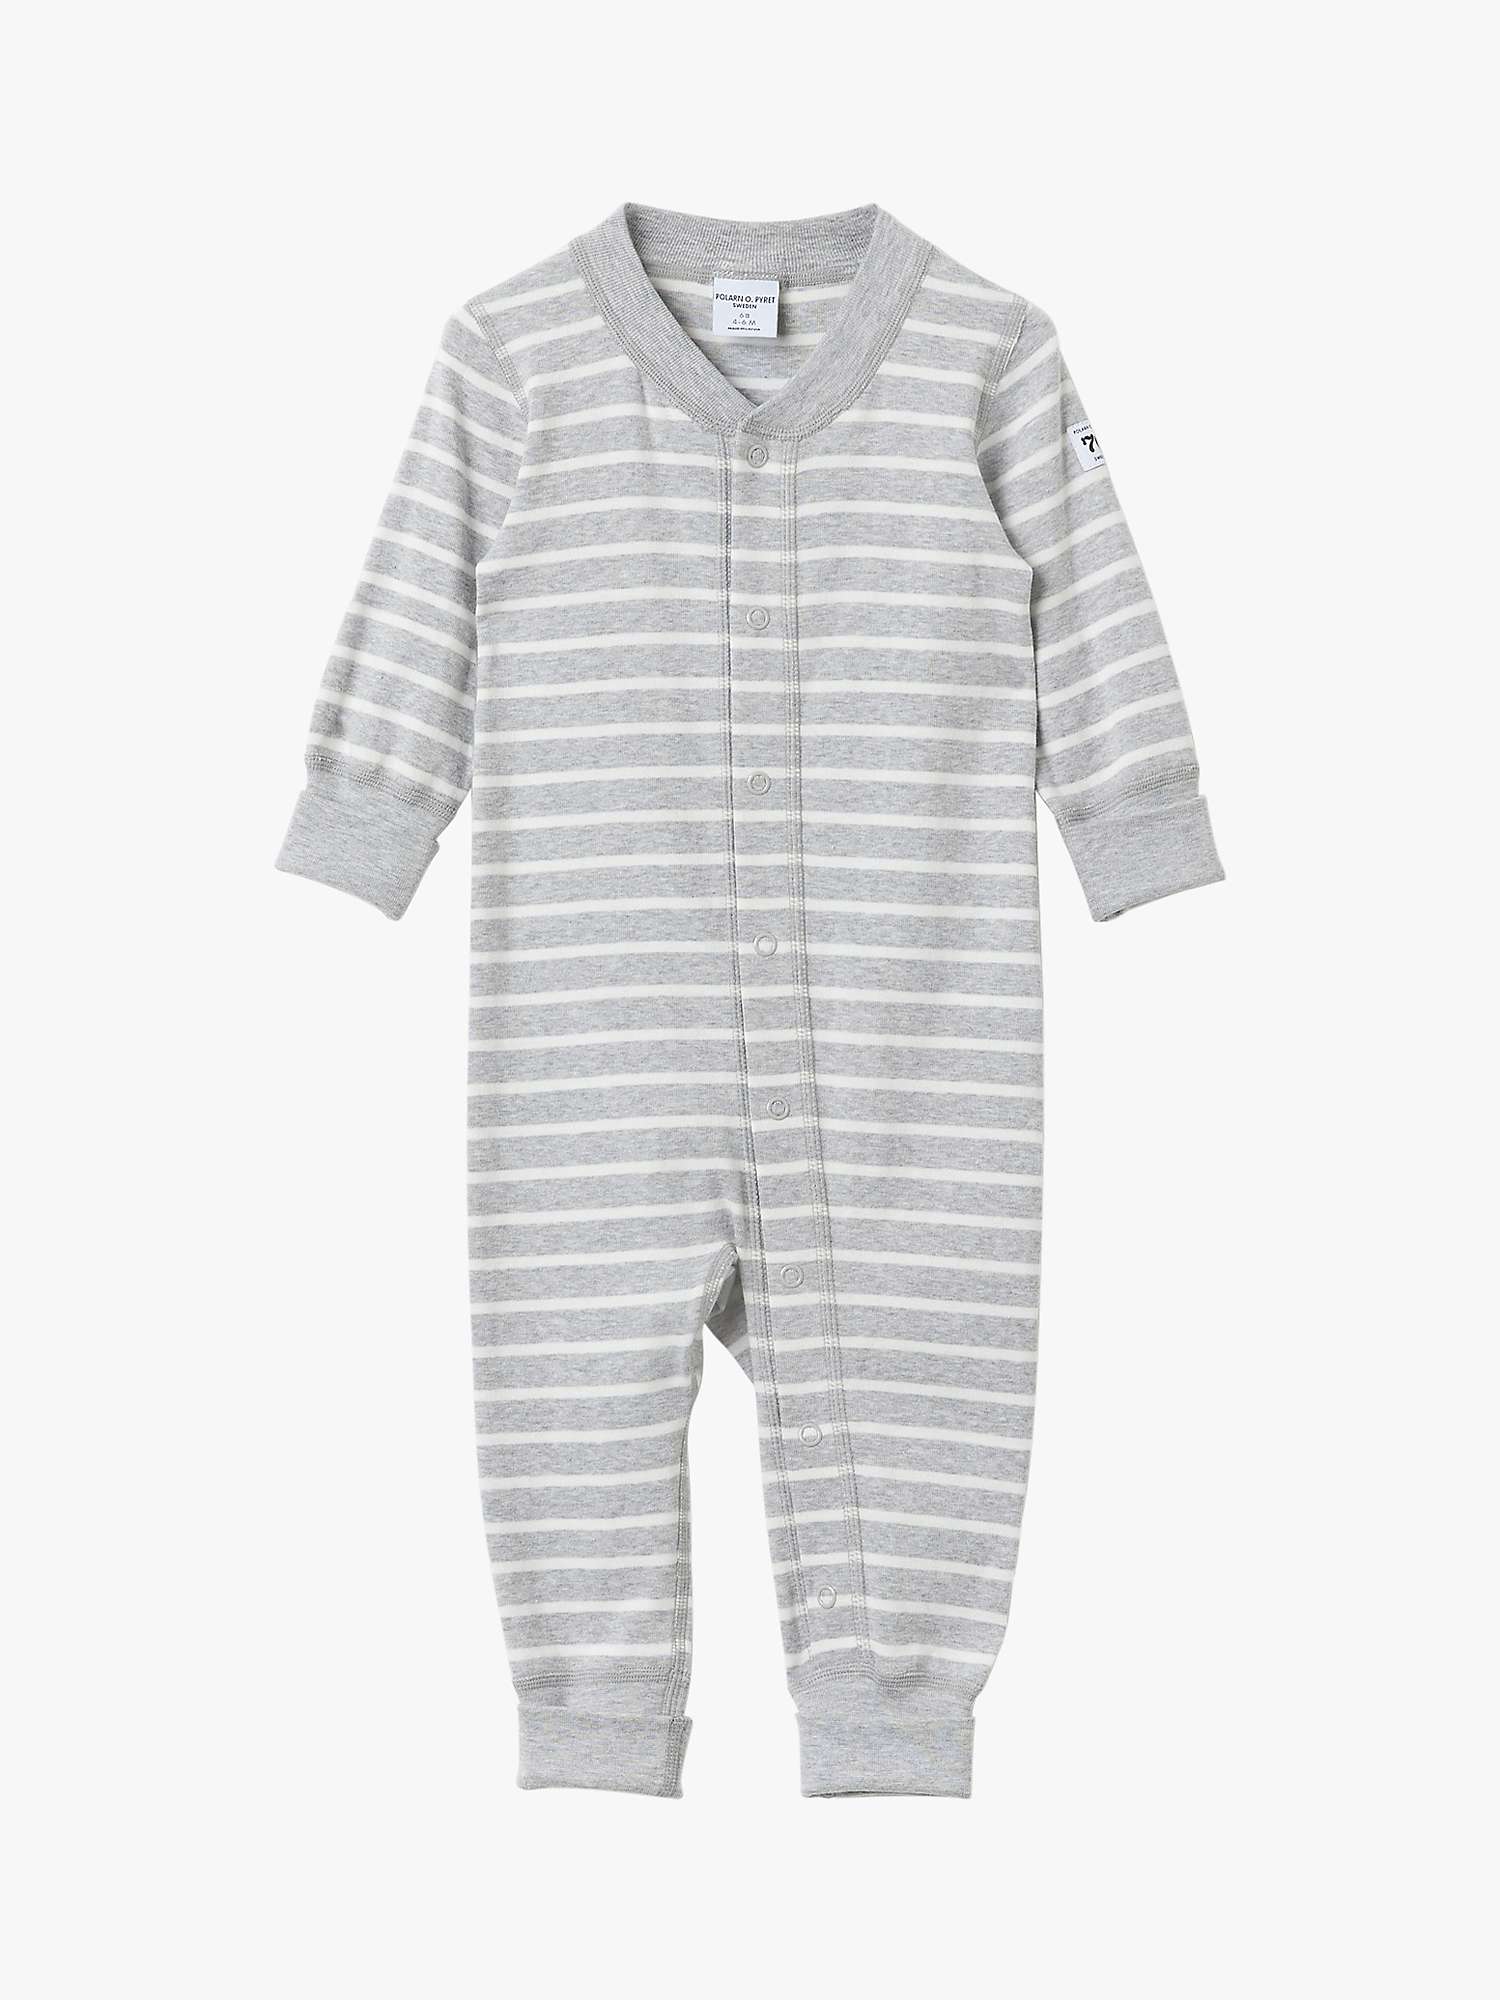 Buy Polarn O. Pyret Baby Orgnaic Cotton Stripe Romper, Grey Online at johnlewis.com